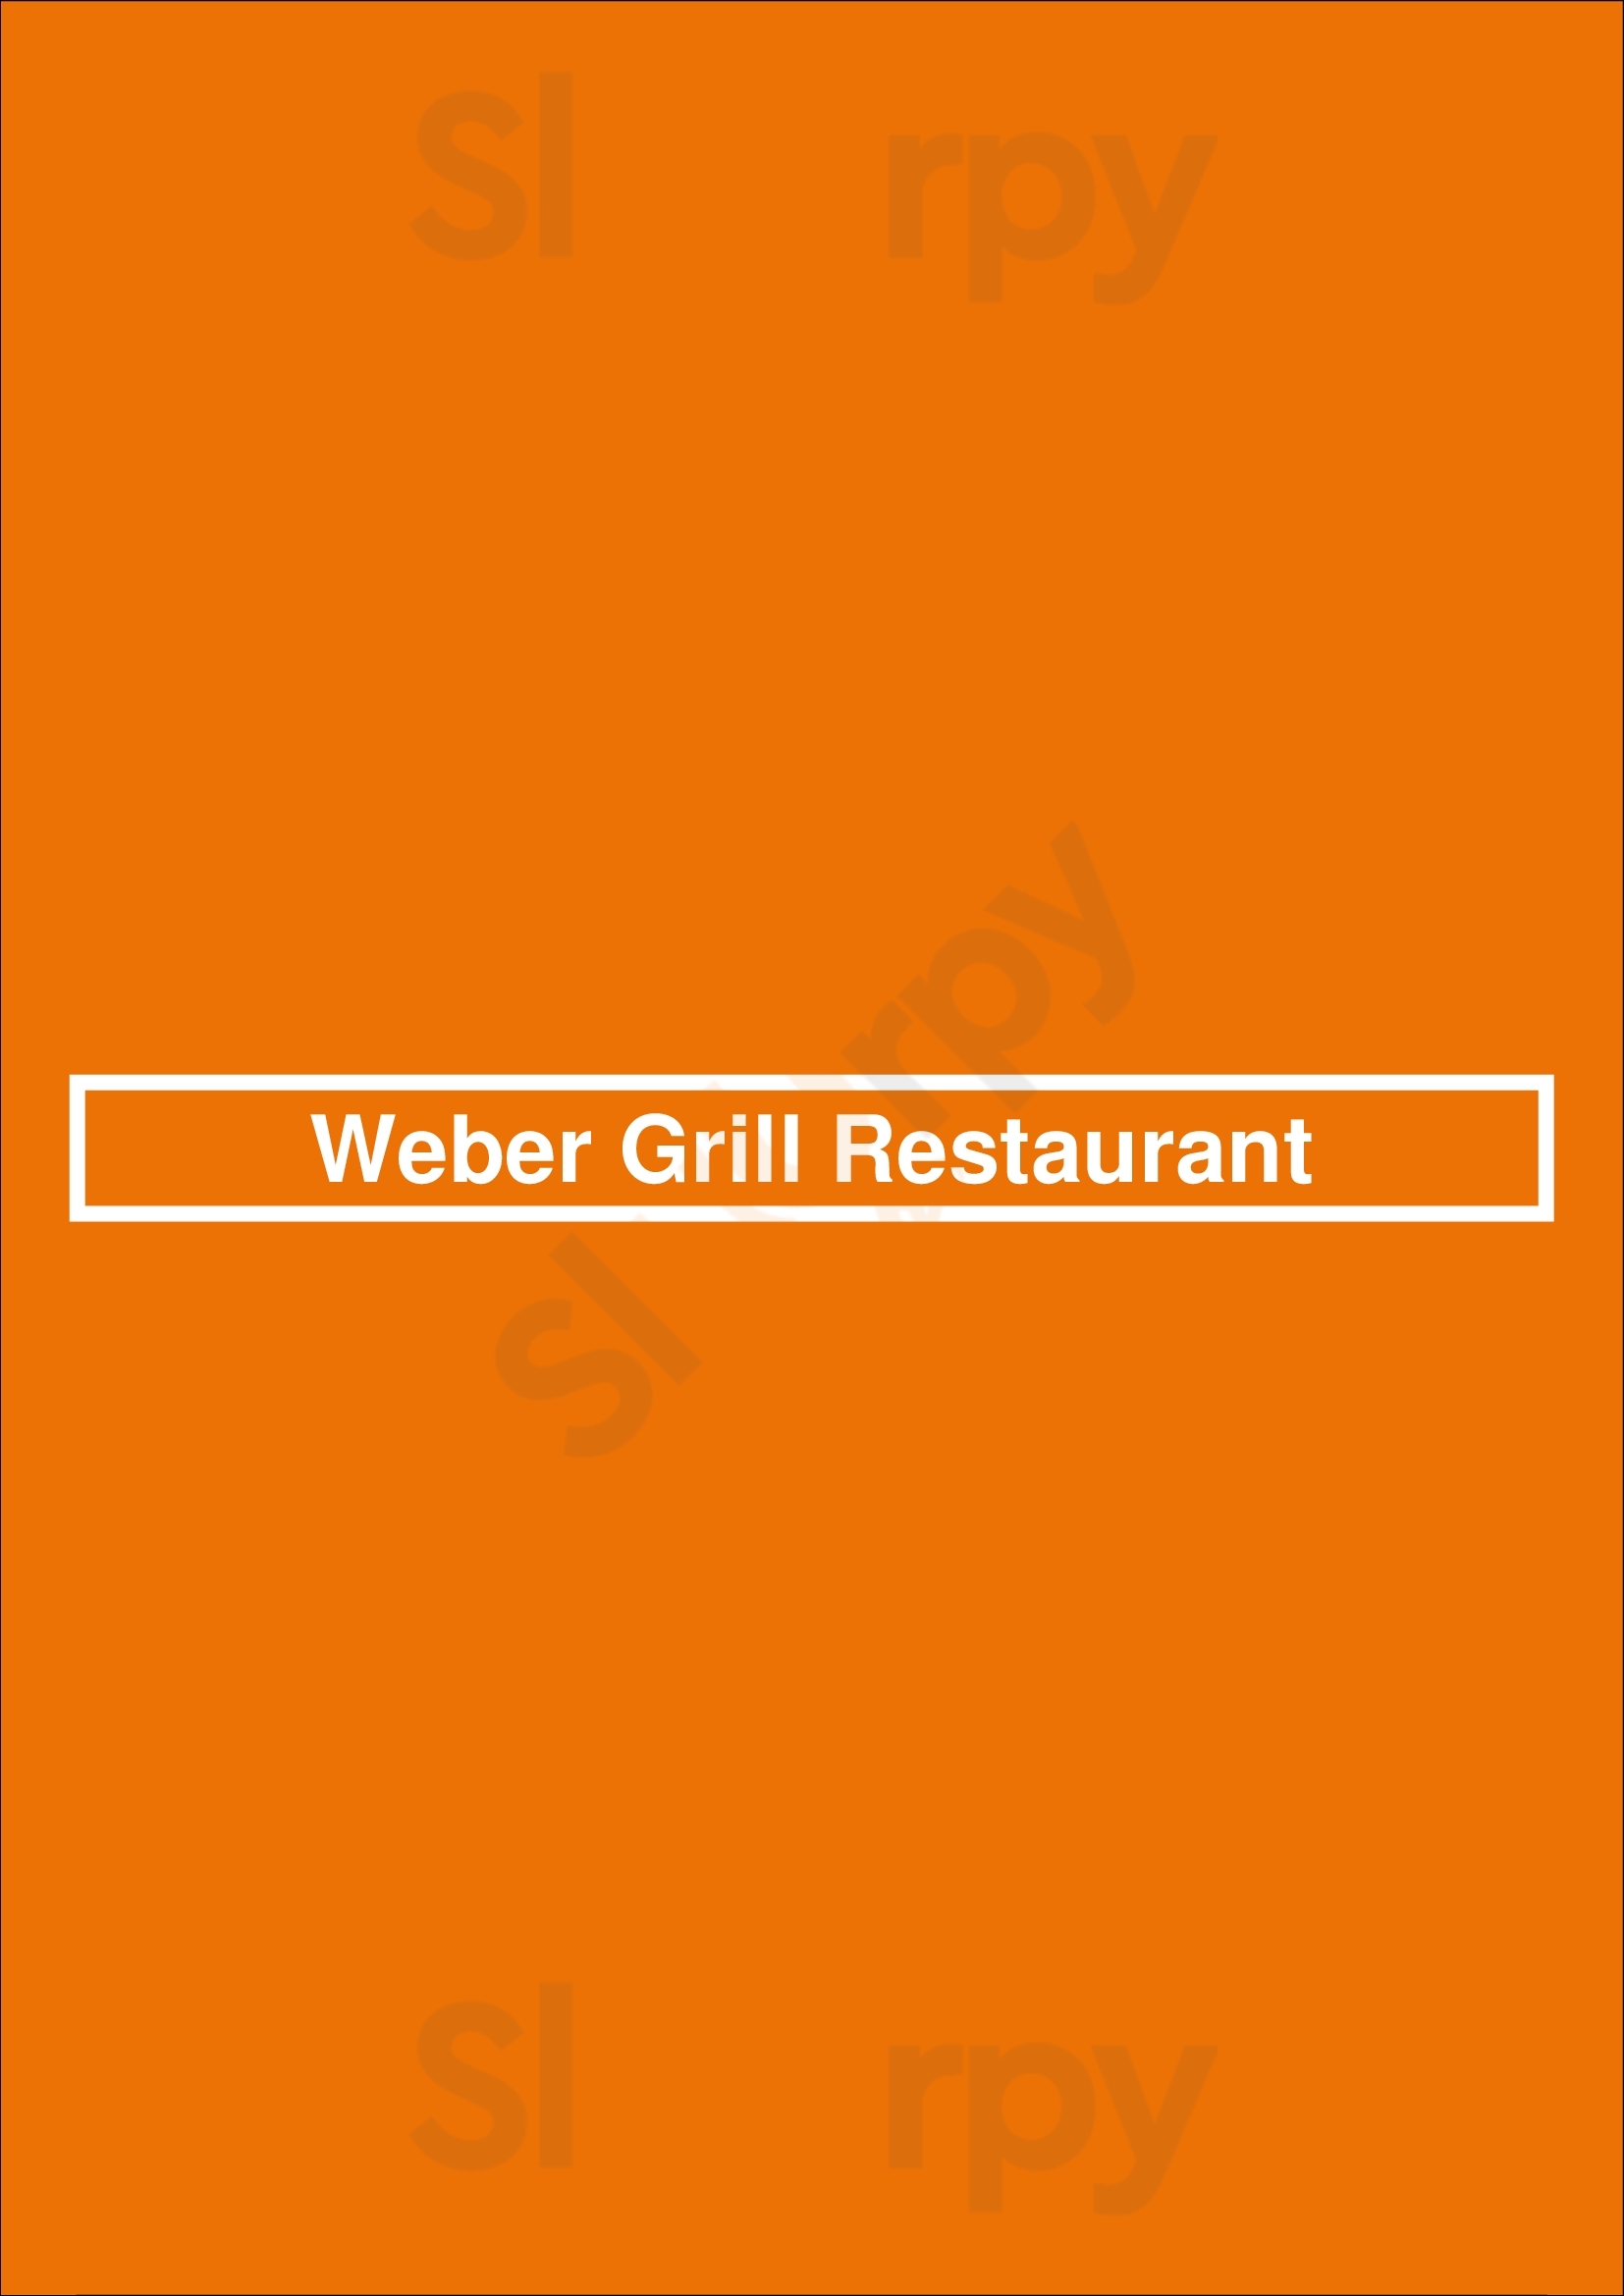 Weber Grill Restaurant Chicago Menu - 1